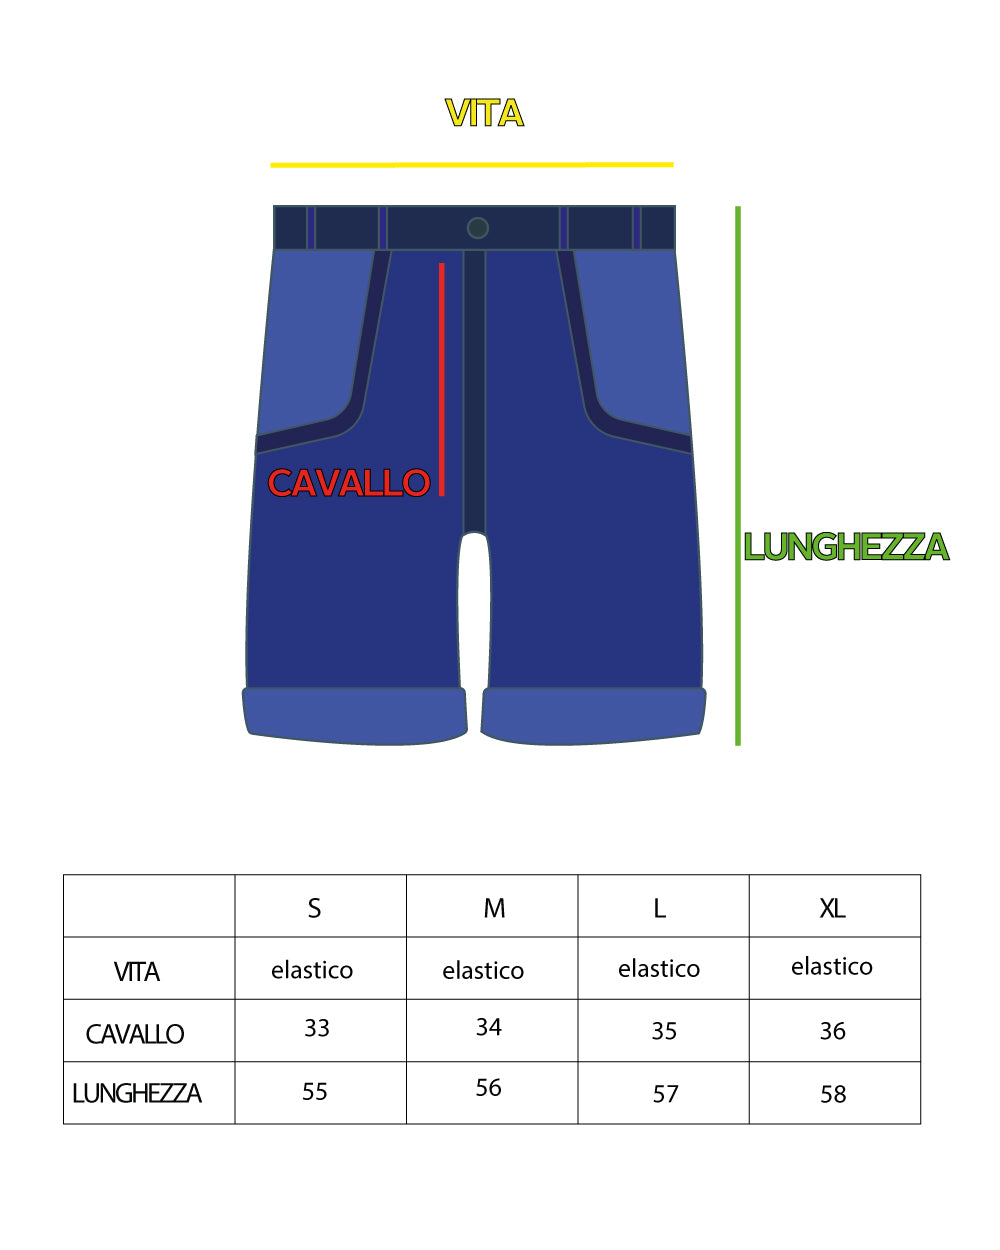 Men's Bermuda Shorts Shaded Black Broken Low Crotch Trousers GIOSAL-PC1693A